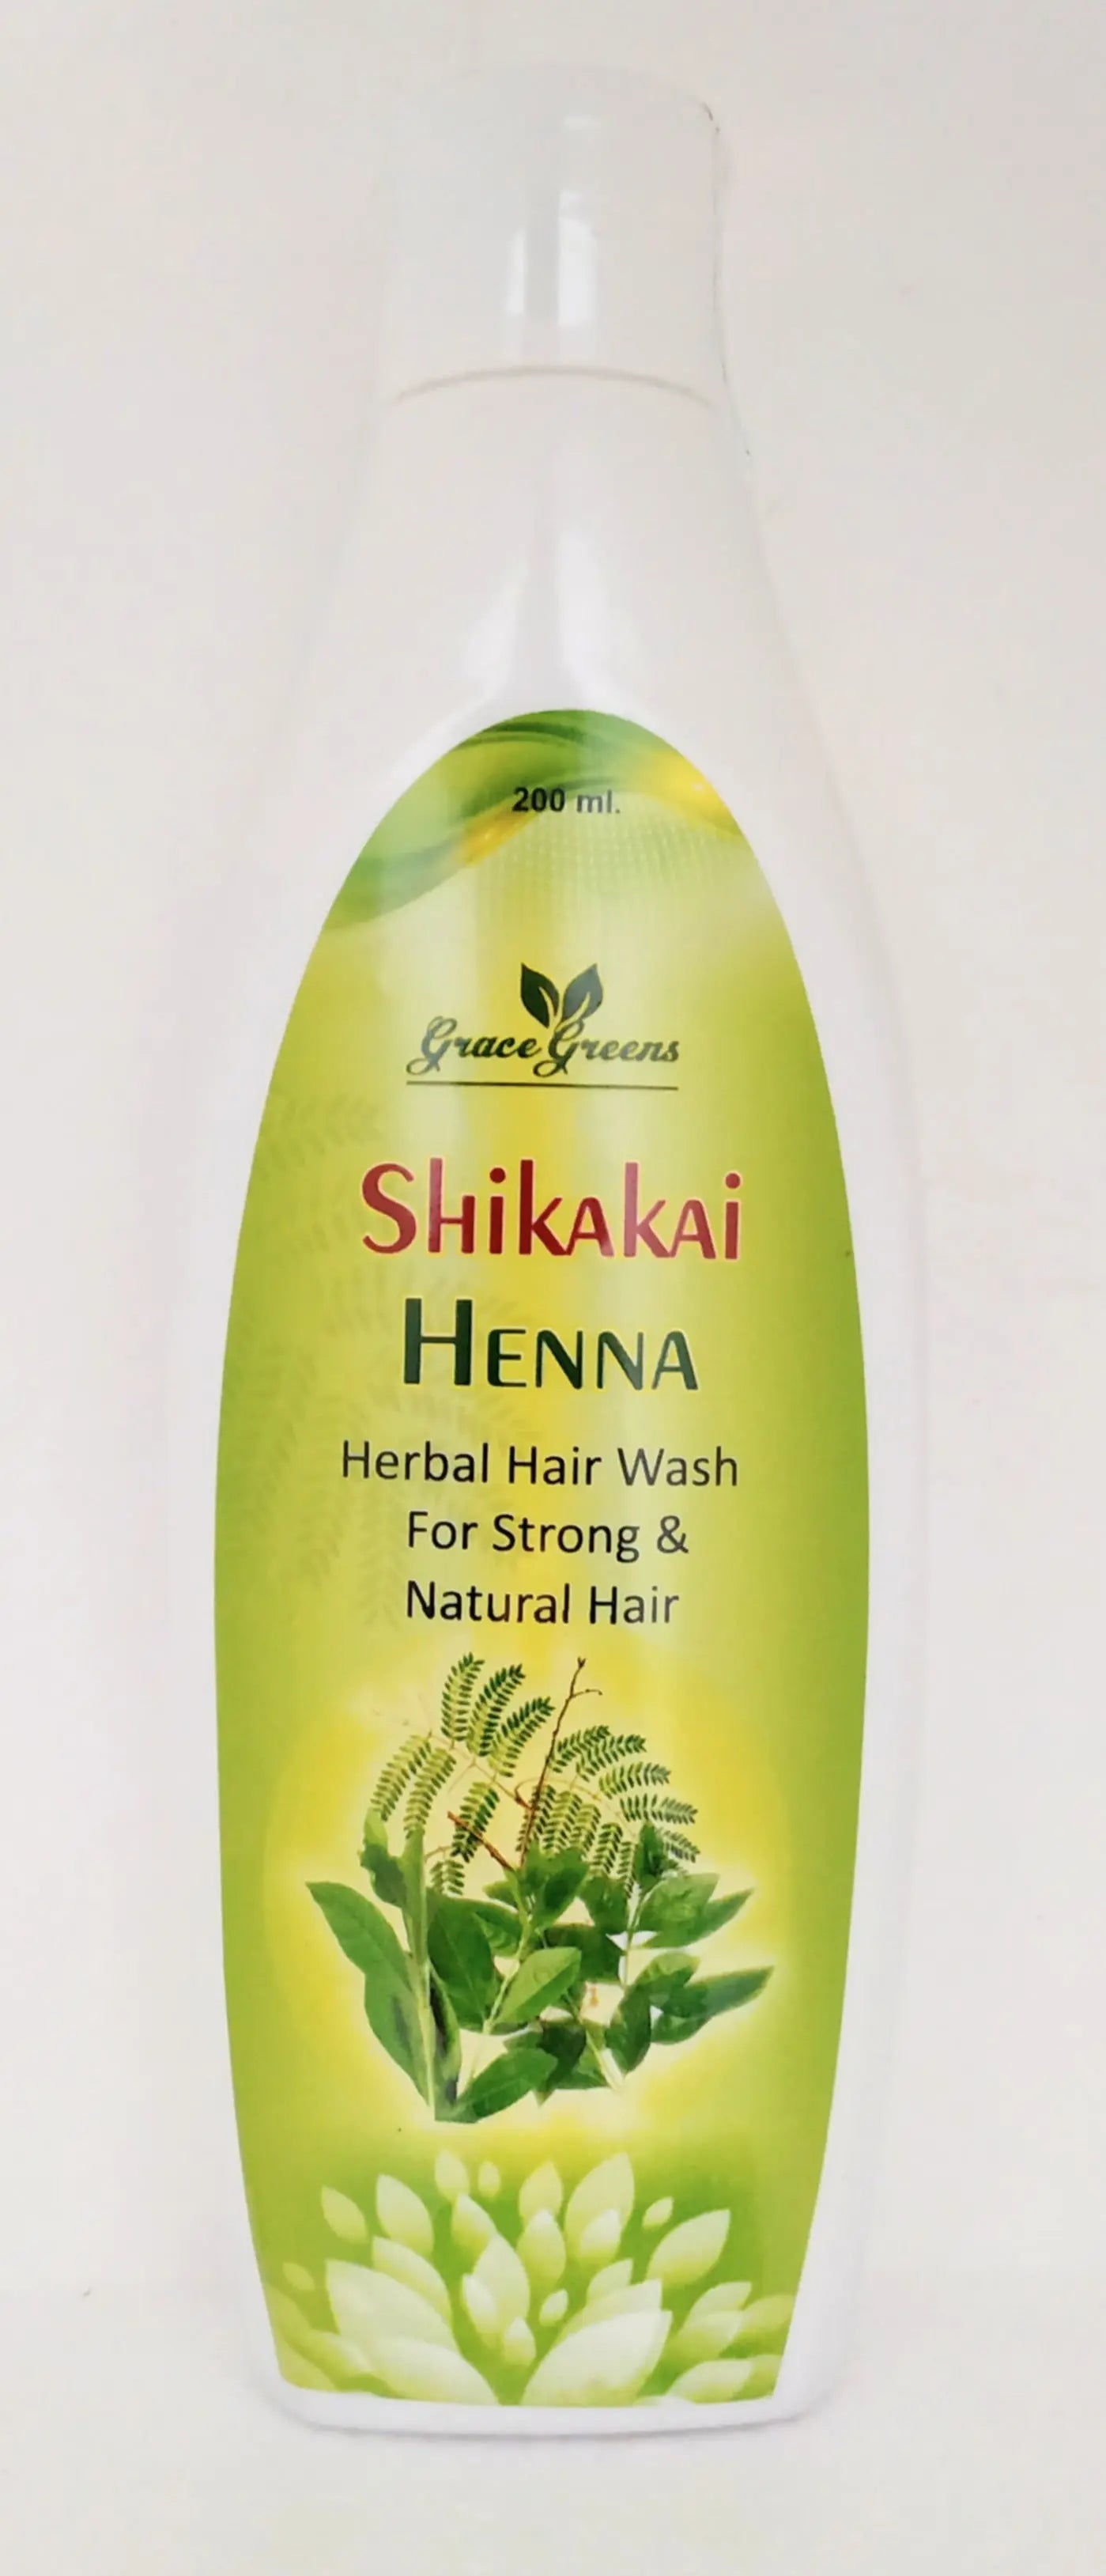 Shikakai henna shampoo 200ml Grace greens